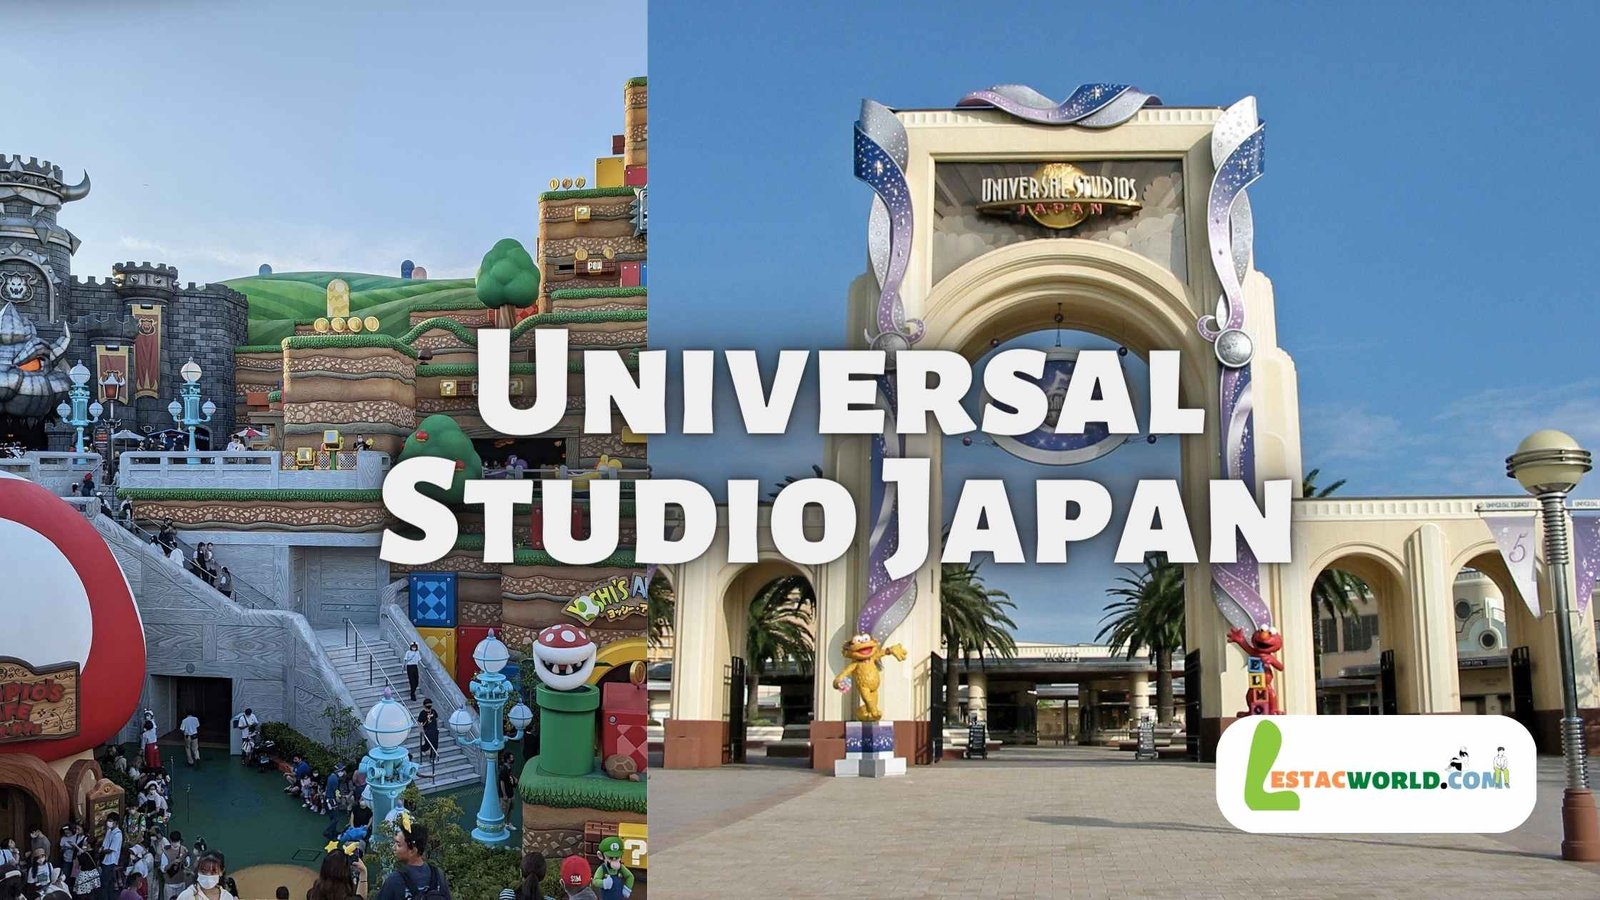 About Universal Studio Japan